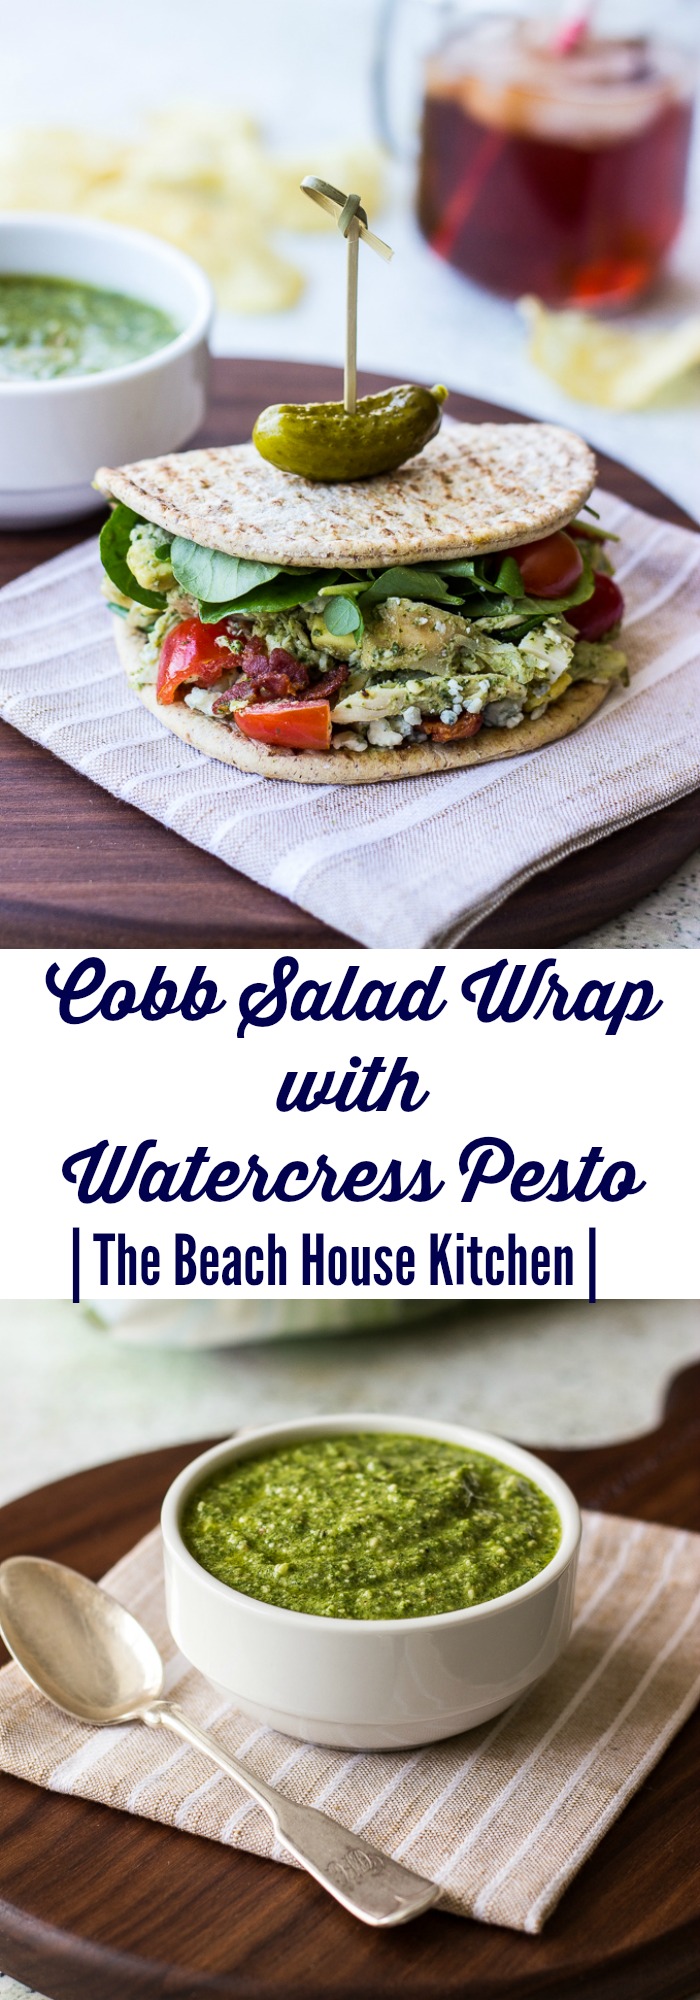 Cobb Salad Flatbread Wrap with Watercress Pesto